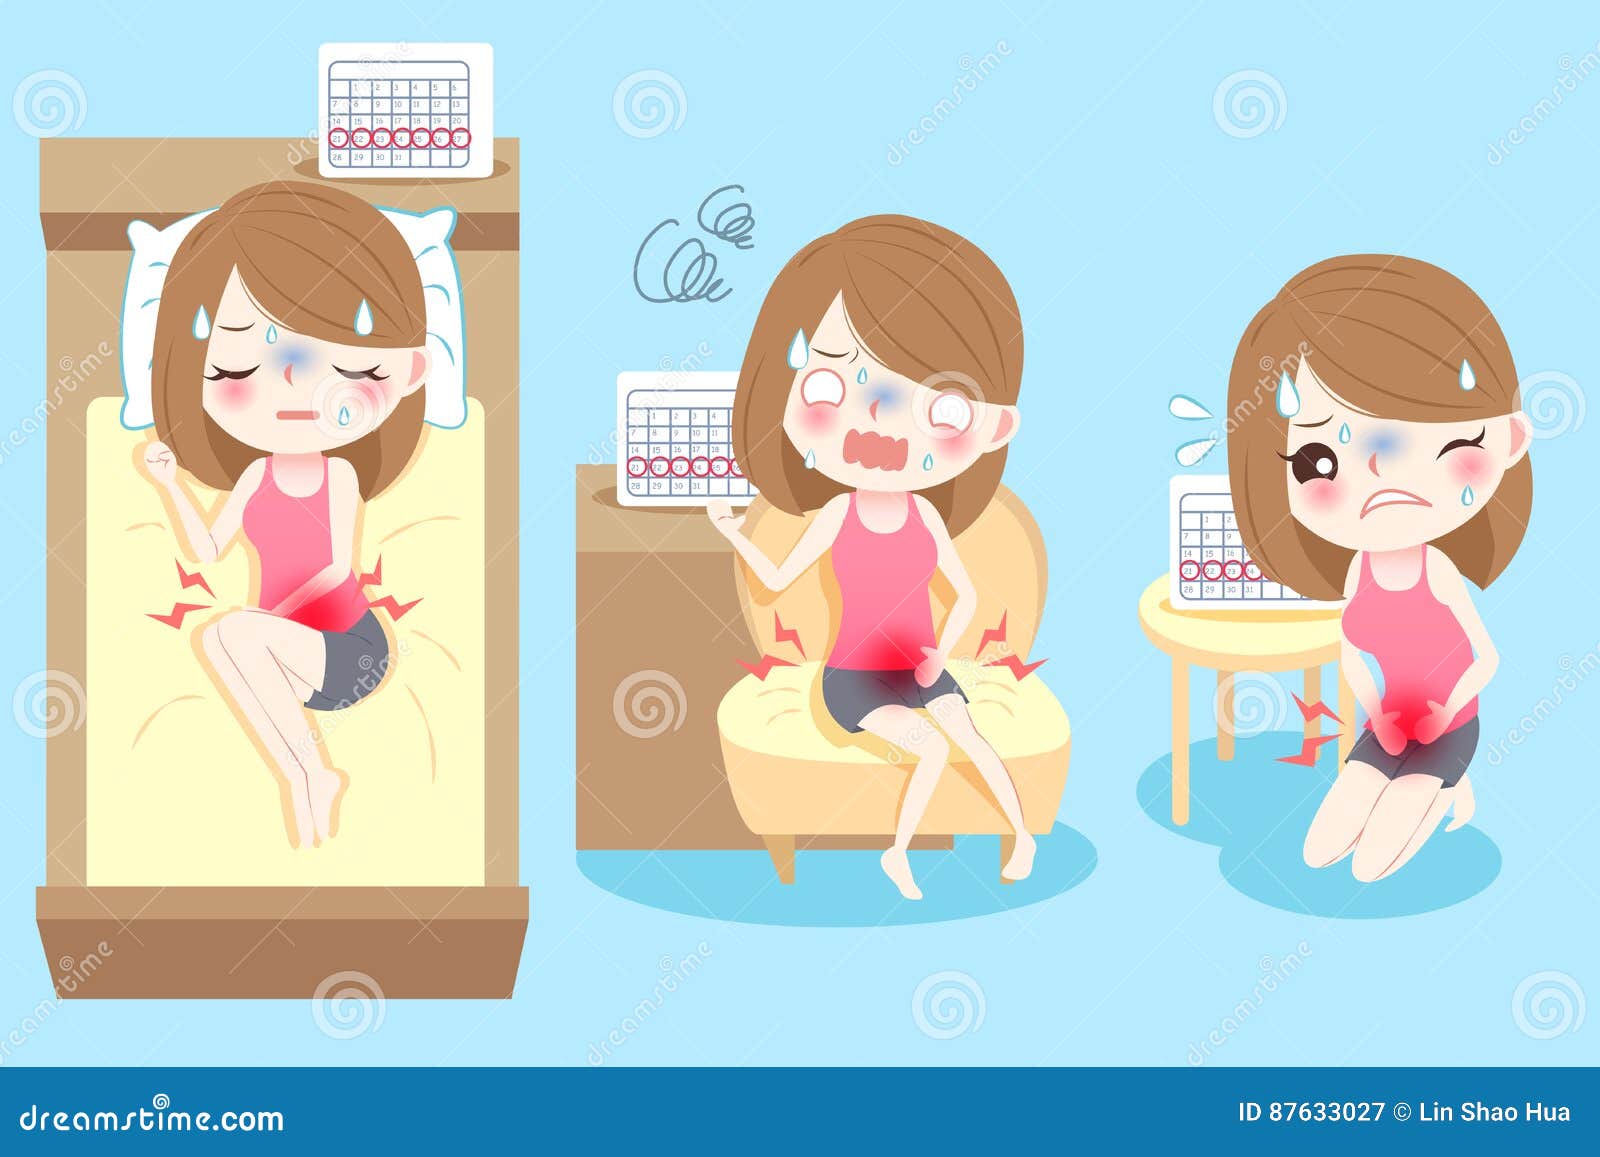 cartoon woman with menstruation